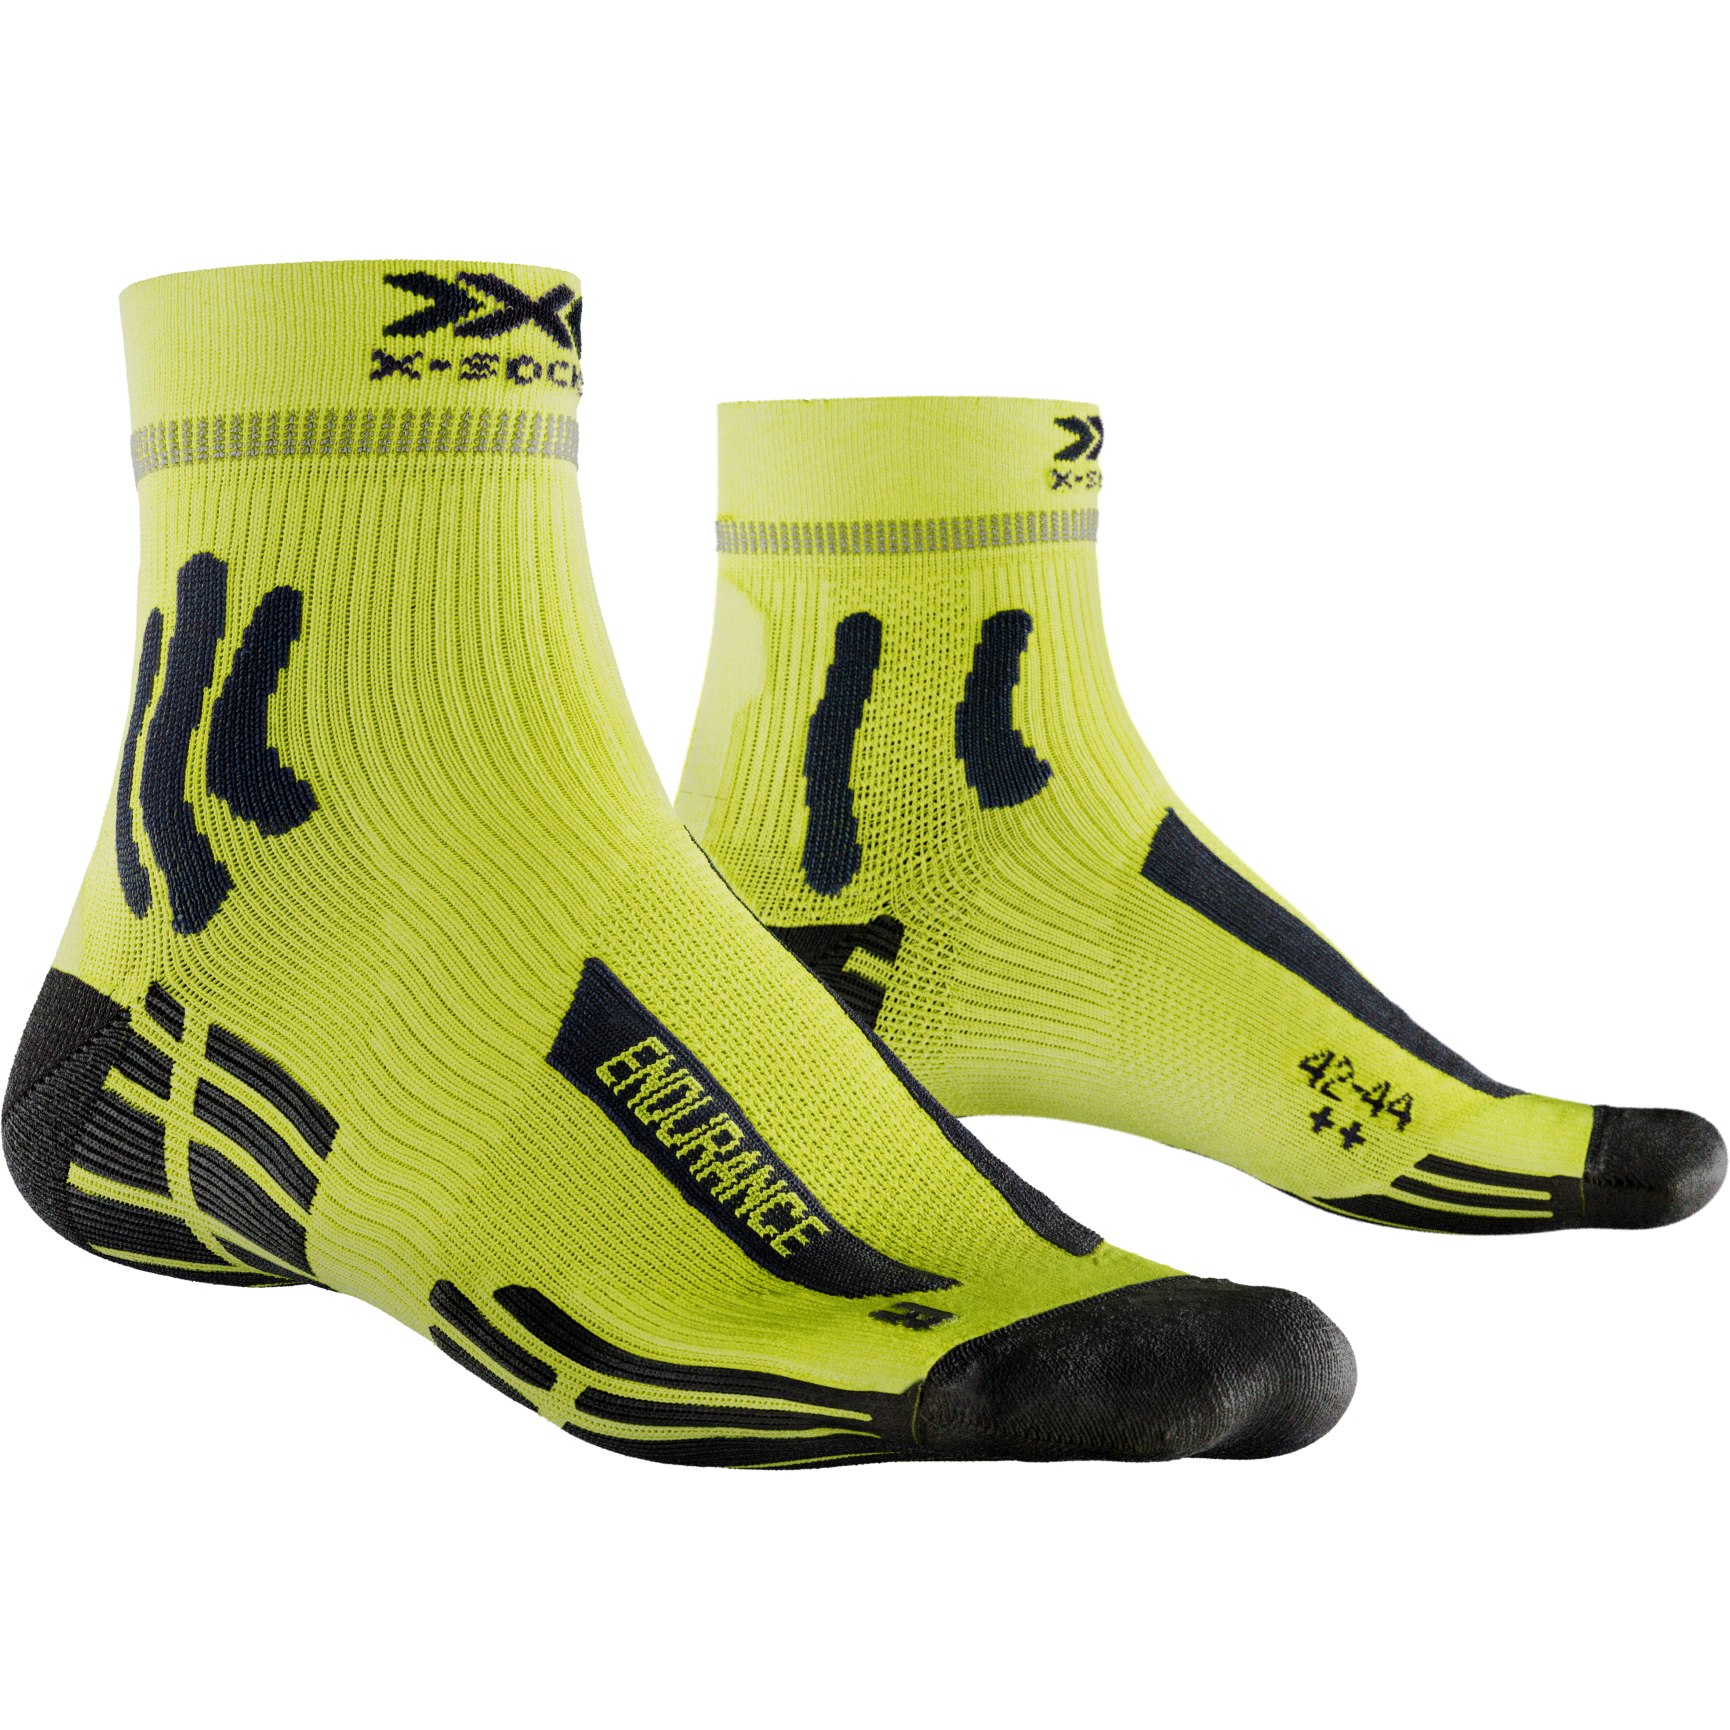 Productfoto van X-Socks Endurance 4.0 Hardloopsokken - fluo yellow/opal black